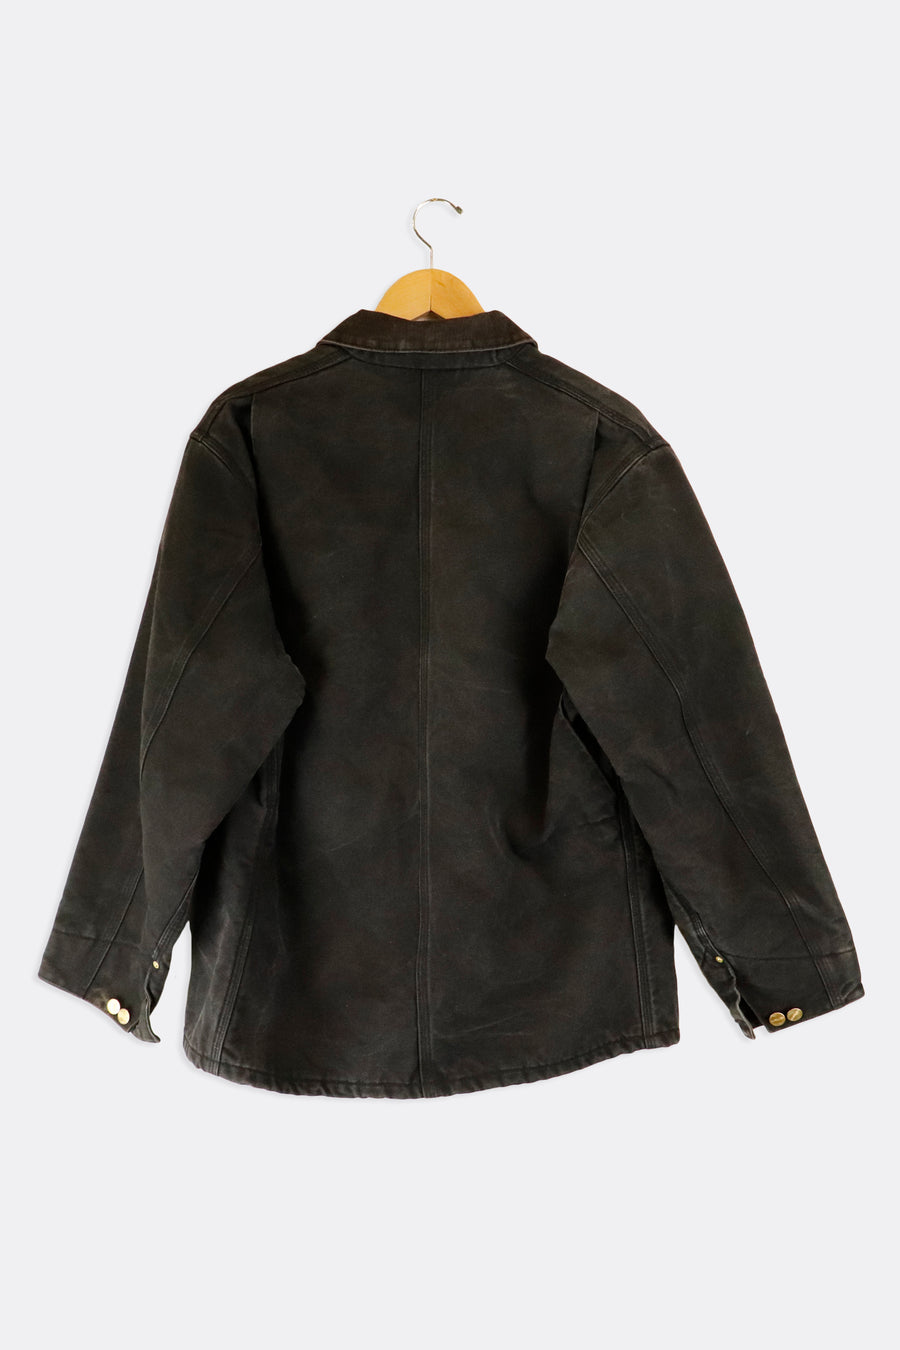 Vintage Carhartt Blanket Lined Chore Brown Corduroy Jacket Sz XL